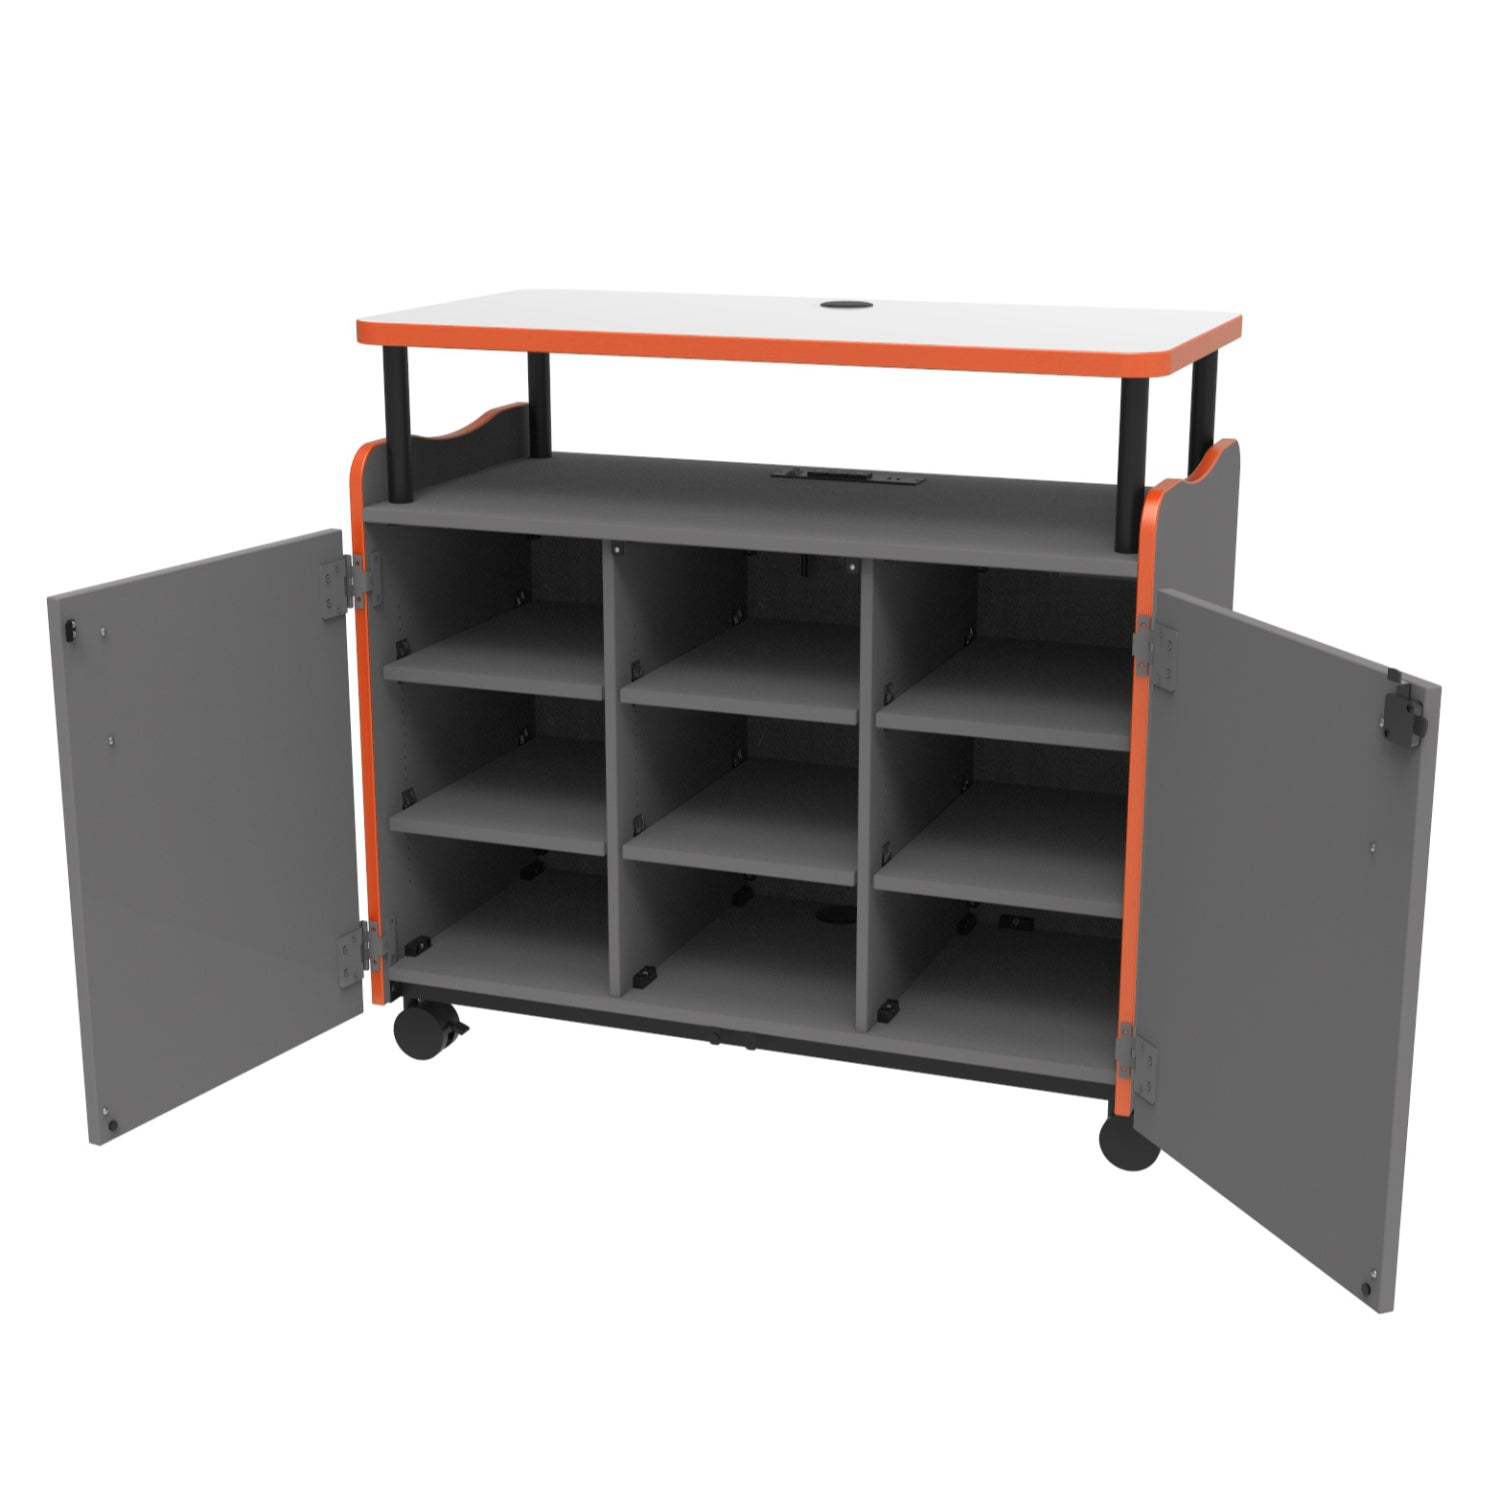 Horizon Makerspace Series Mobile Teachers Workstation with 6 Adjustable Shelves